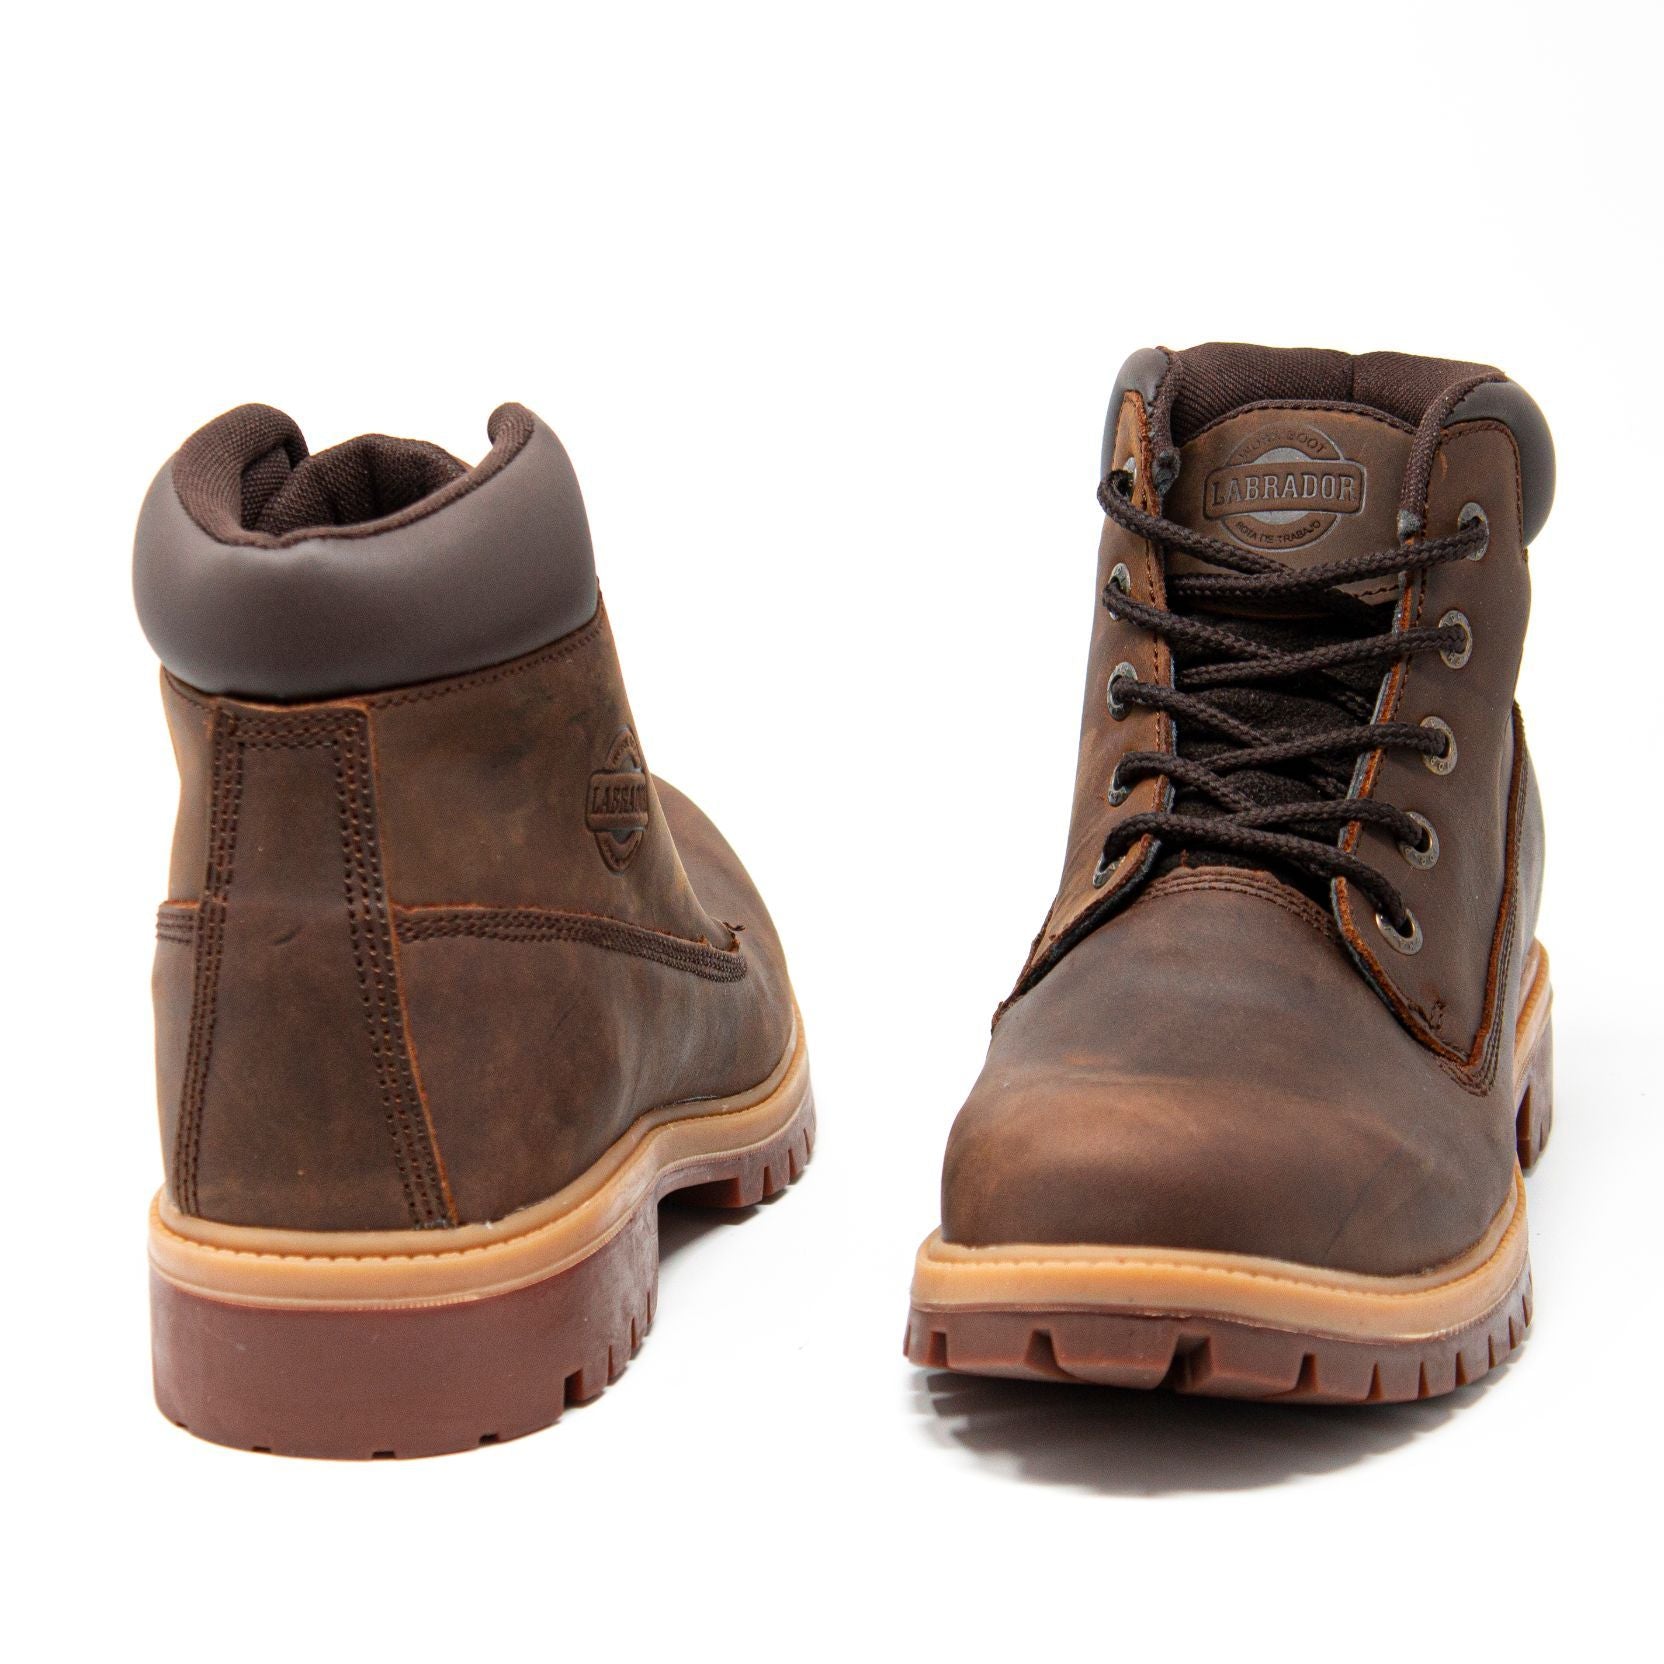 Men's Work Boots - Heavy Duty - Brown Work Boots - Labrador - 6" Work Boots - Taupe 6in Work Boots